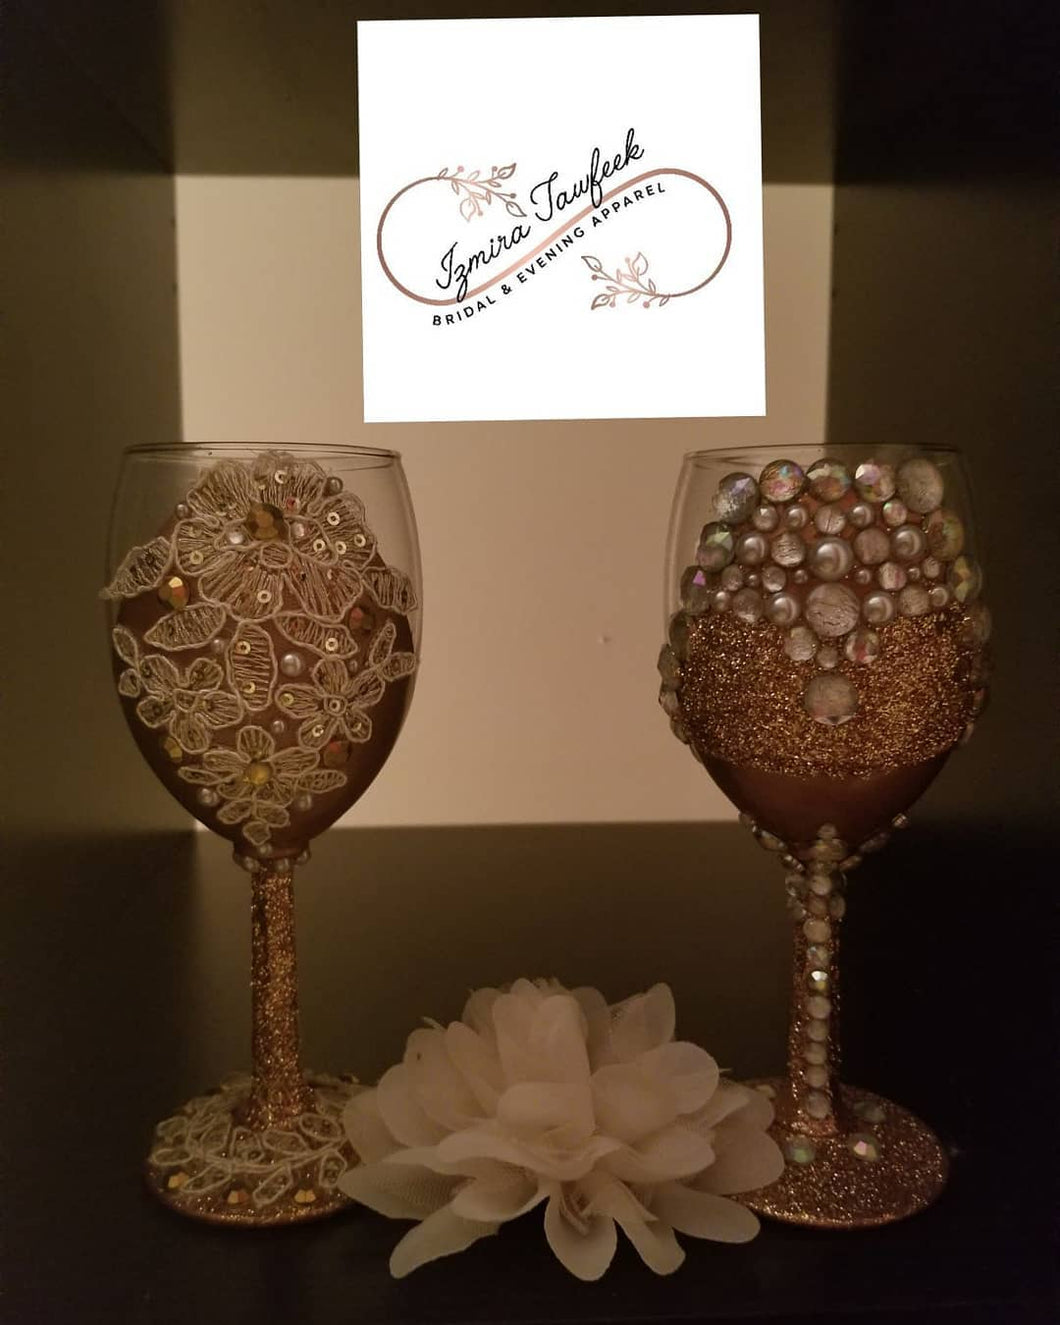 Rose gold wine glasses